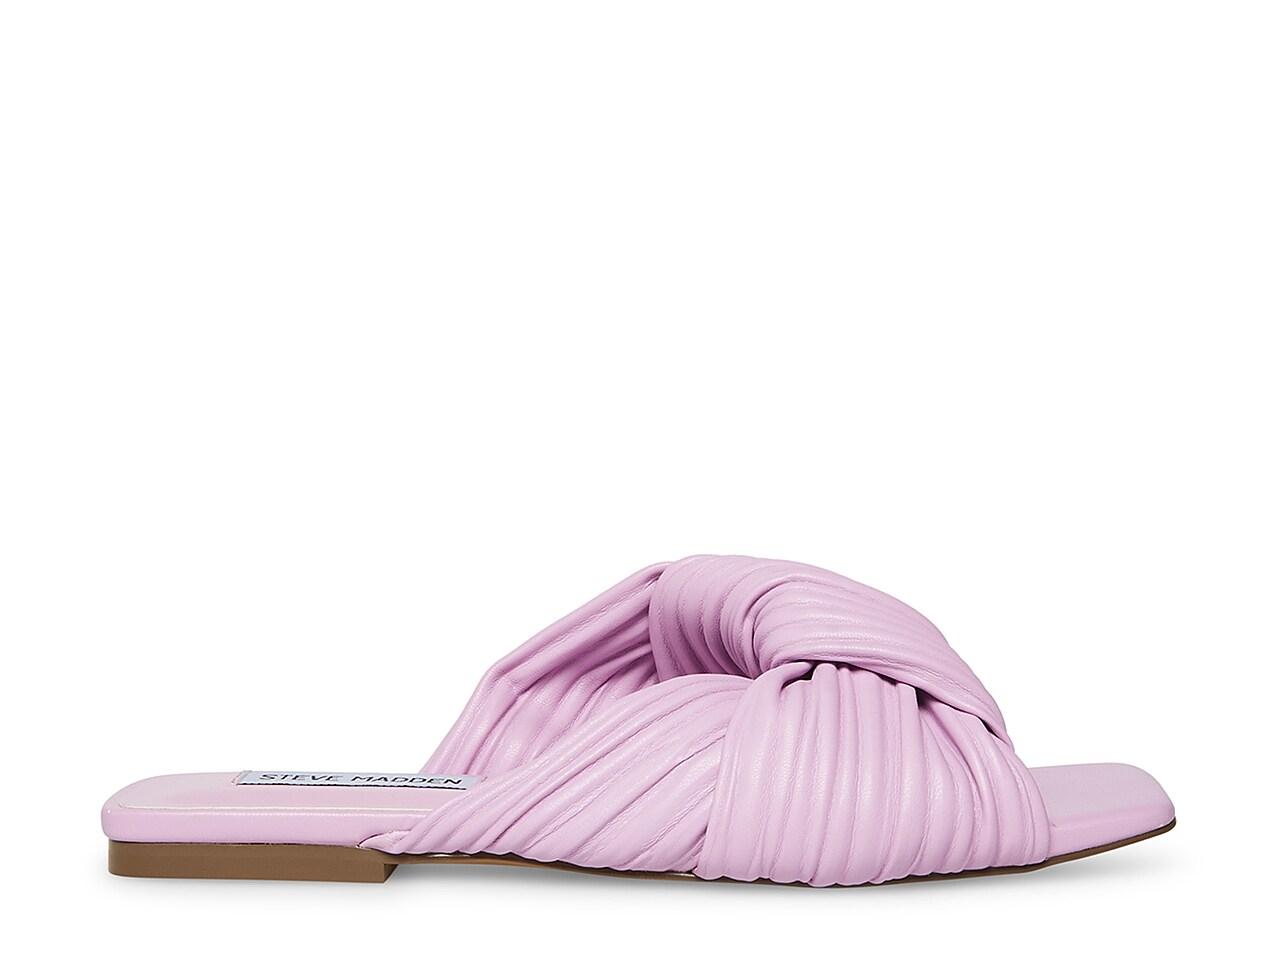 Steve Madden Synthetic Mentor Flat Sandal in Purple - Lyst